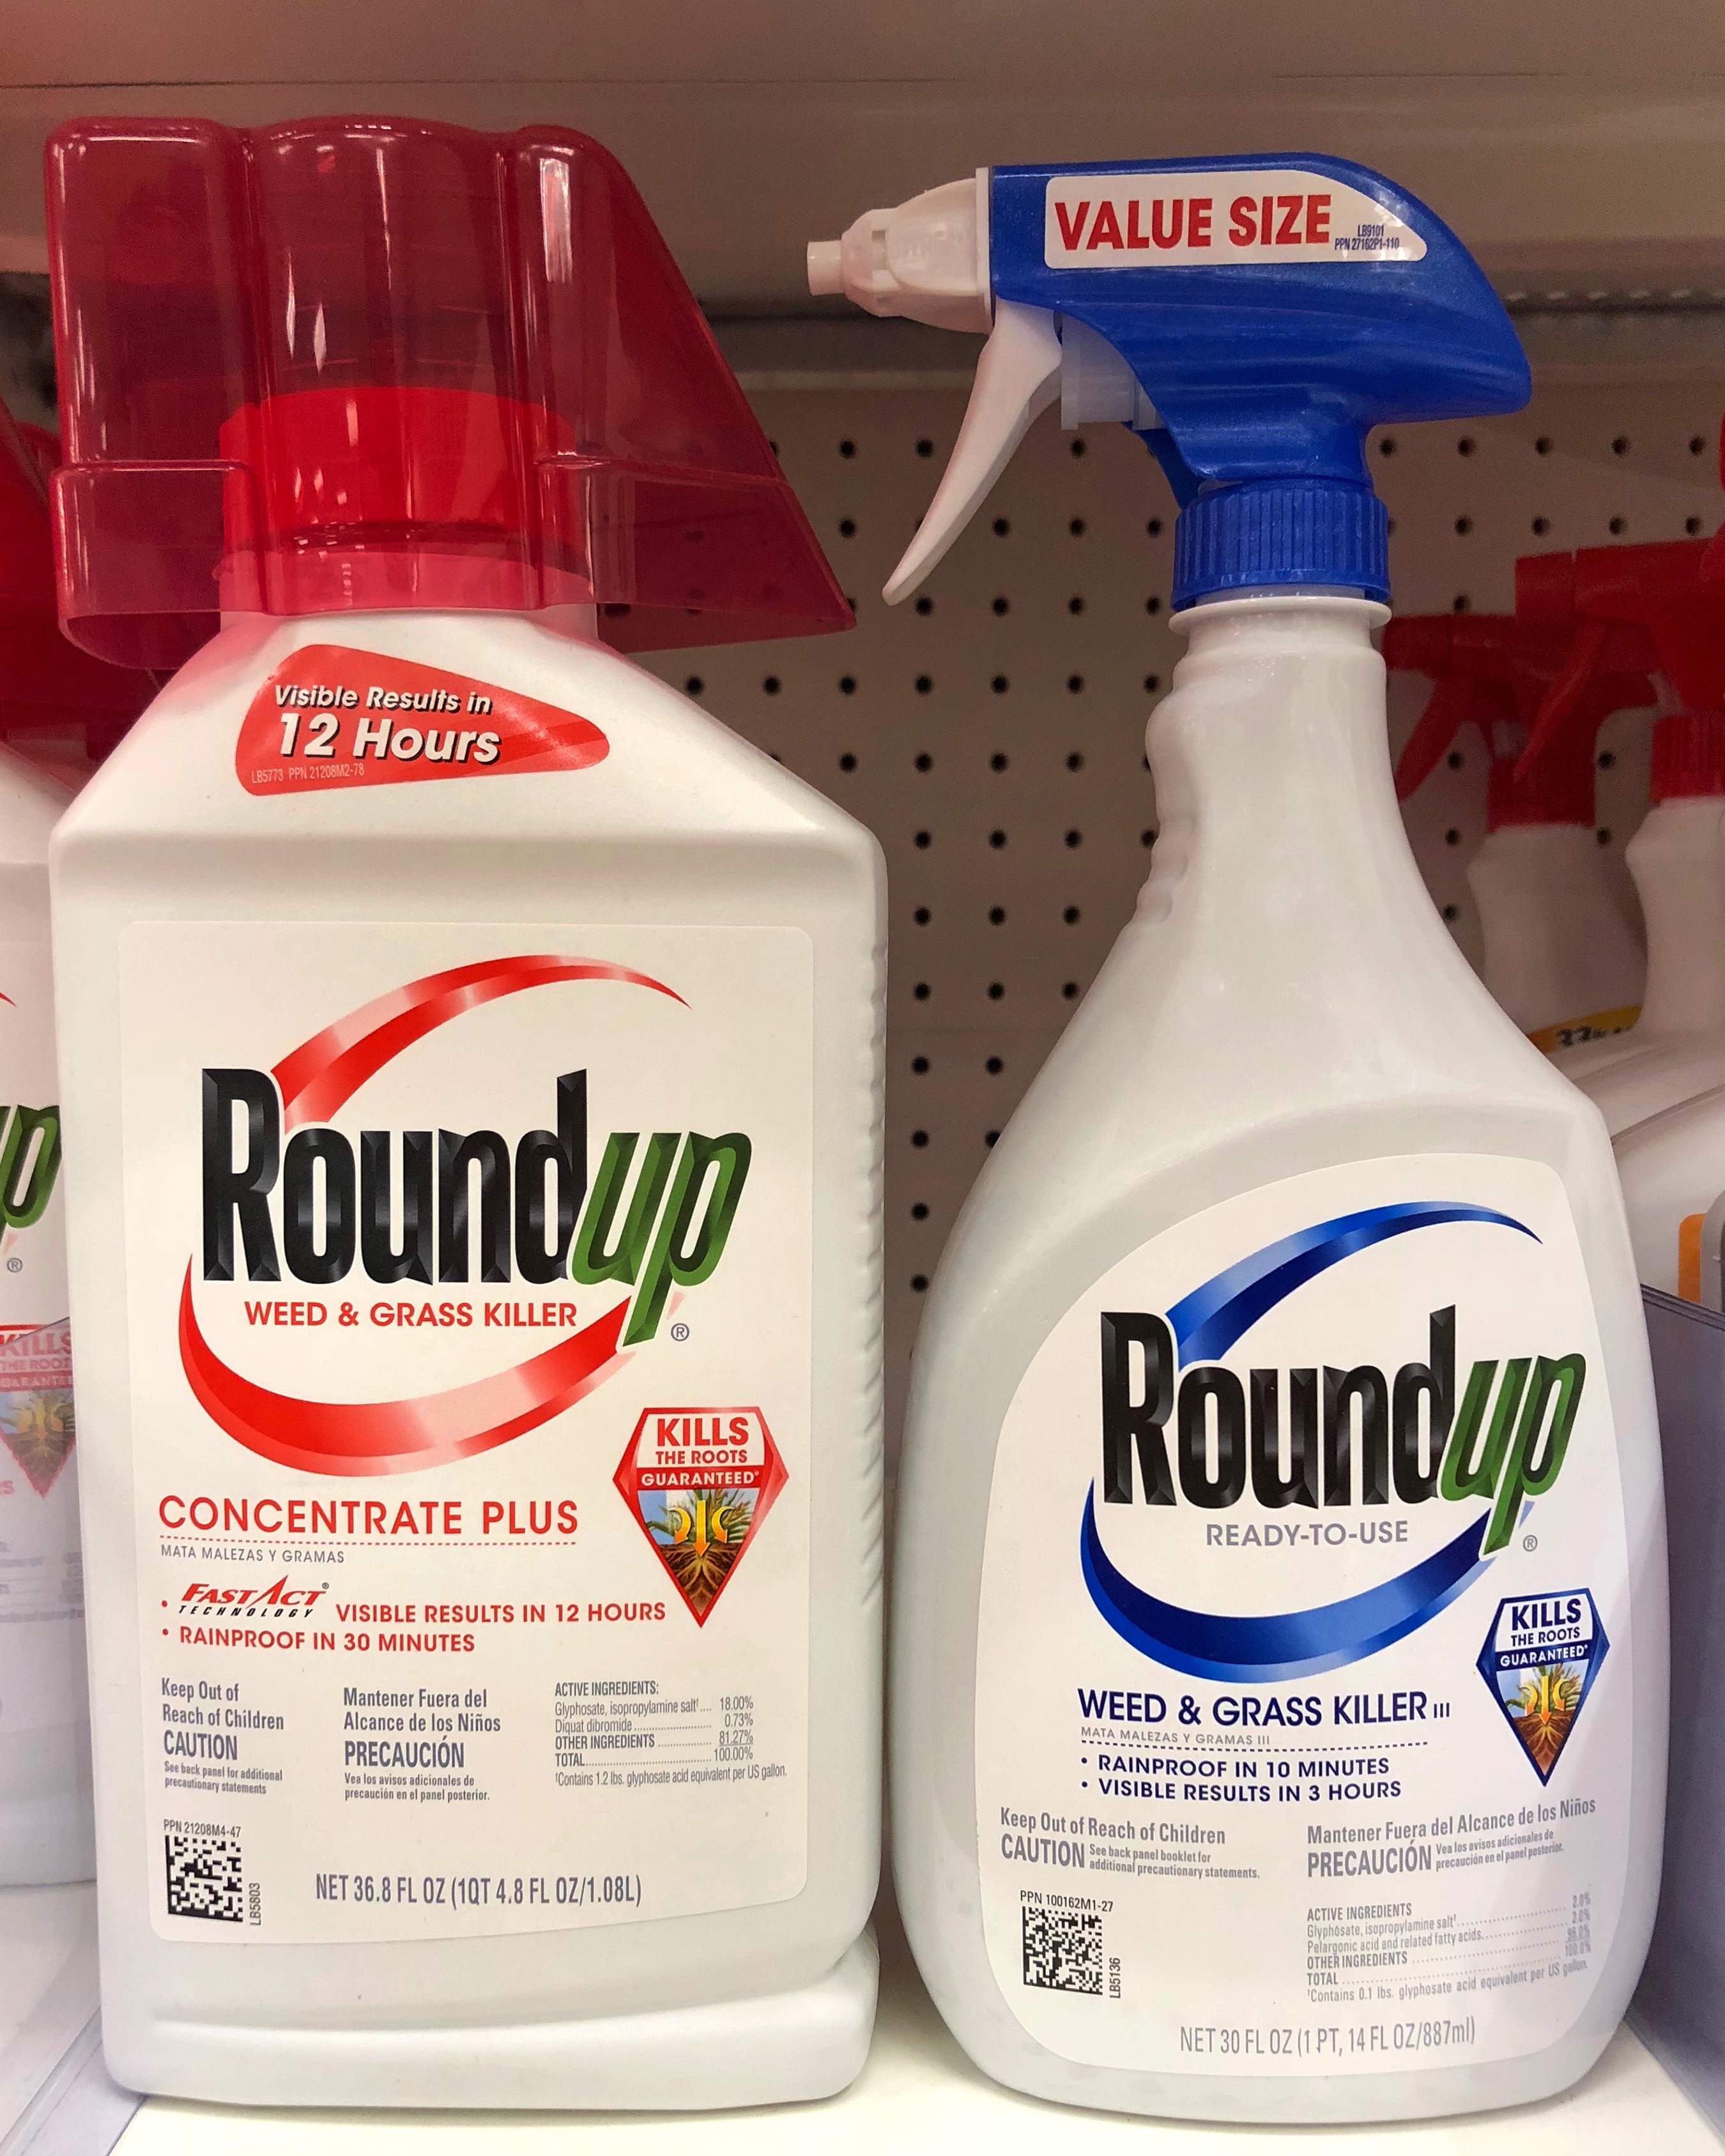 Roundup cancer lawsuit injury Monsanto Florida Attorney